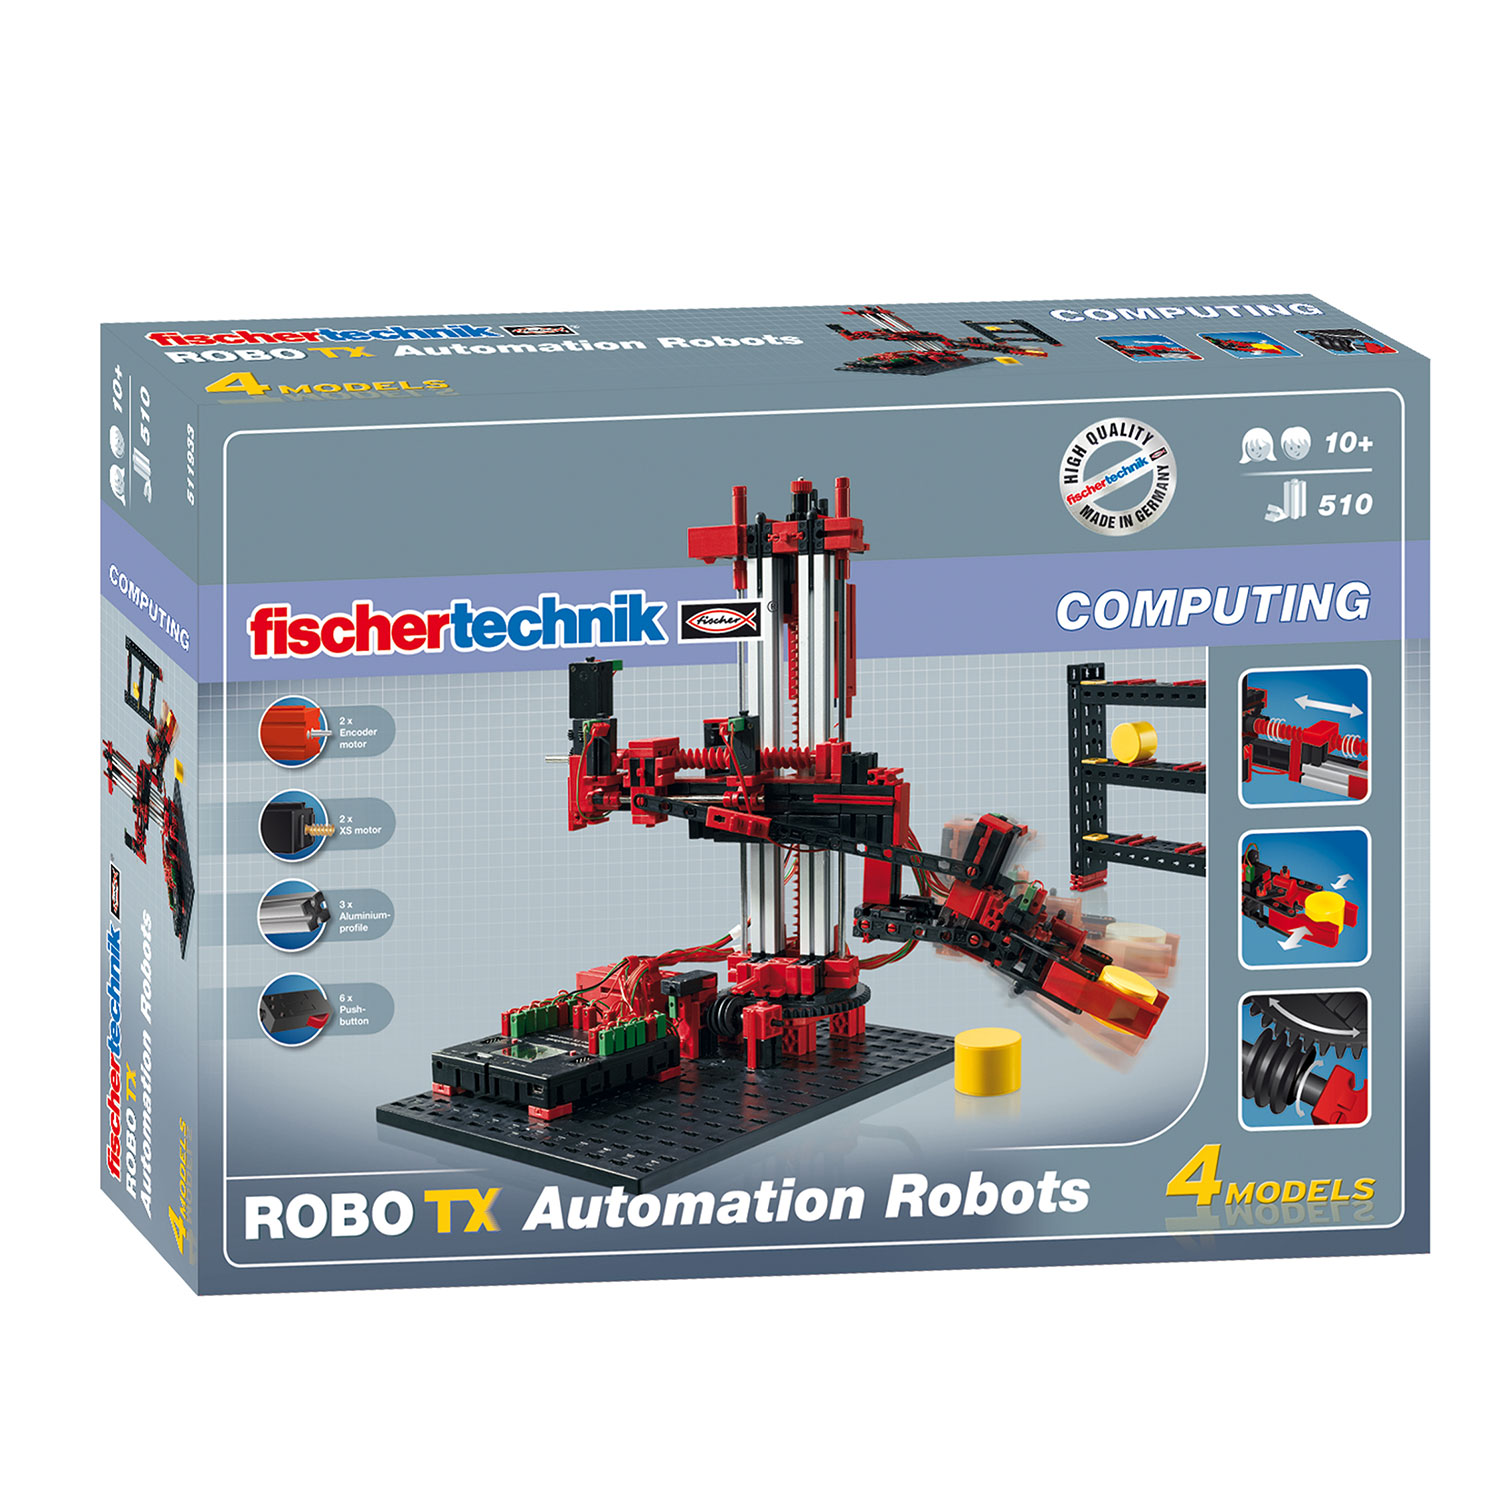 Fischertechnik Robotics - Robo TX Automation Robots, 510dlg.